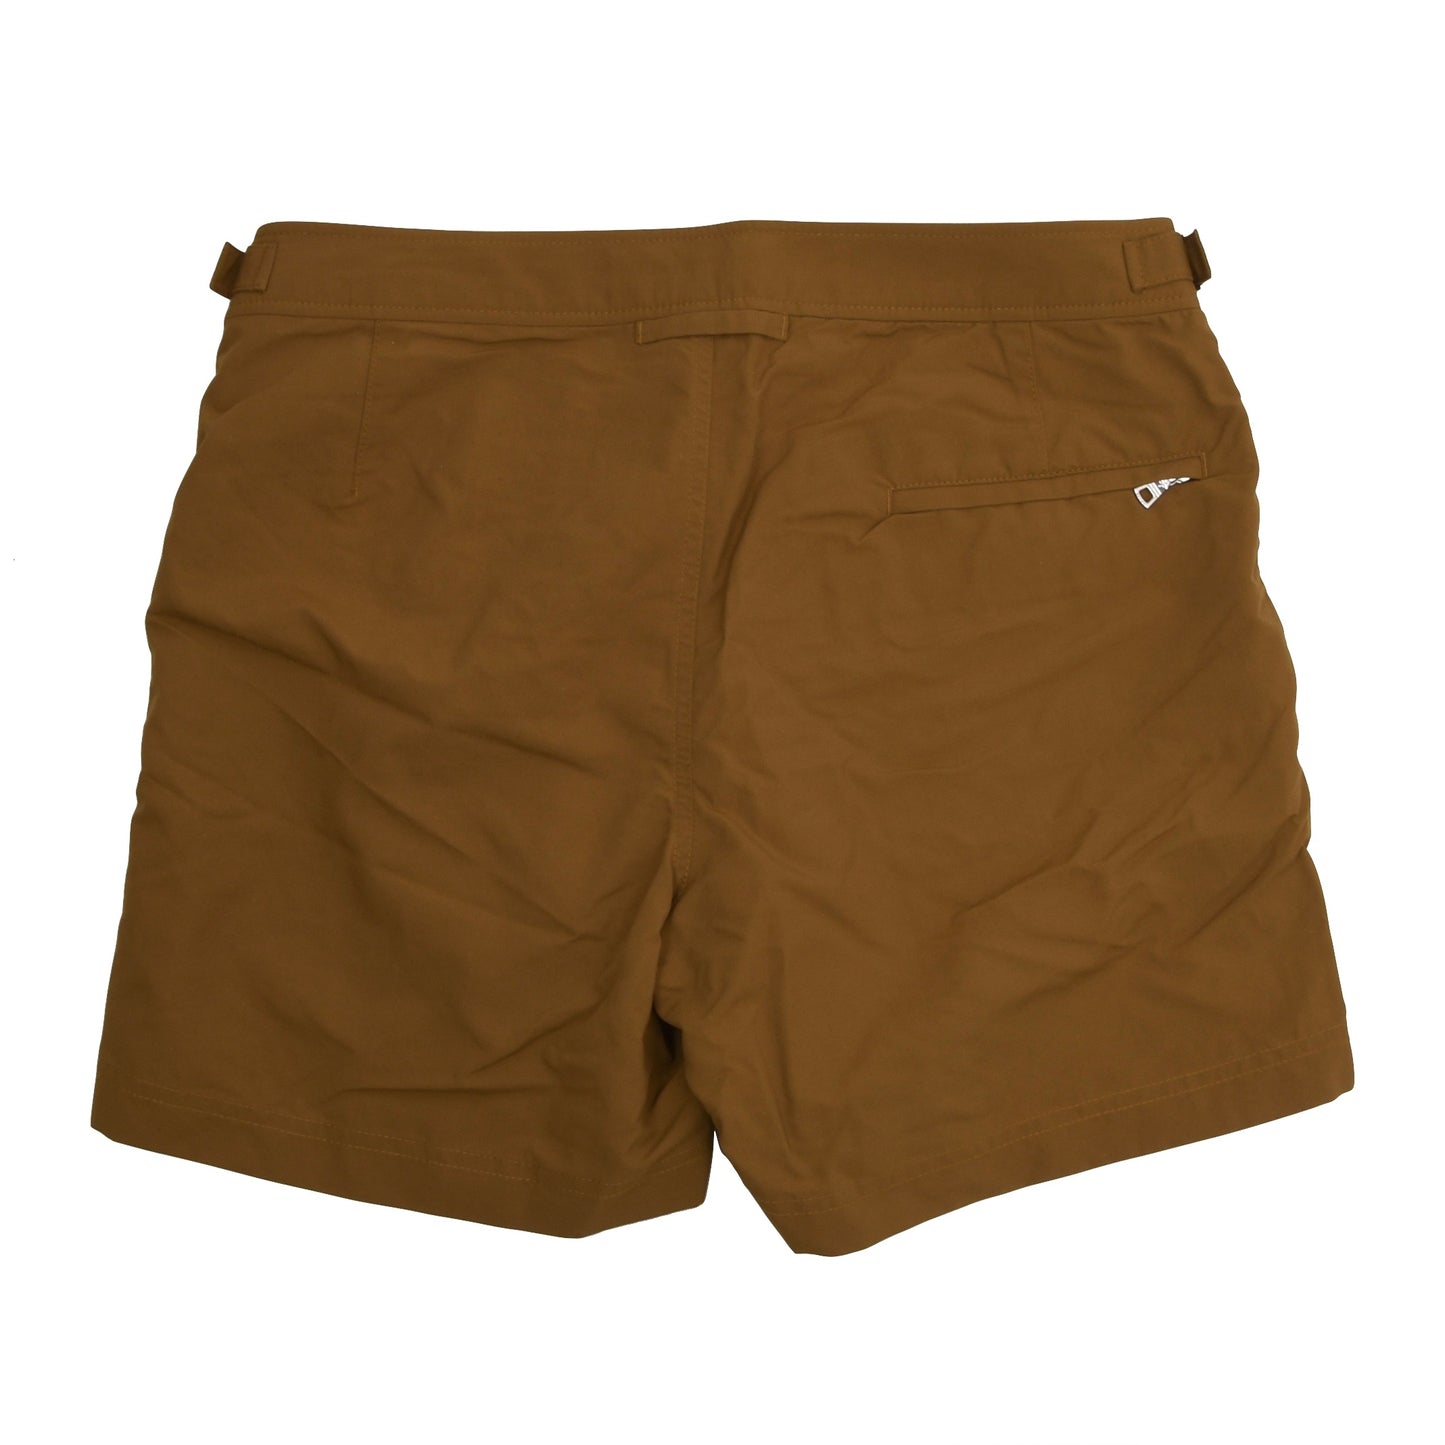 New Orlebar Brown Swim Shorts Size 30 - Tobacco Brown